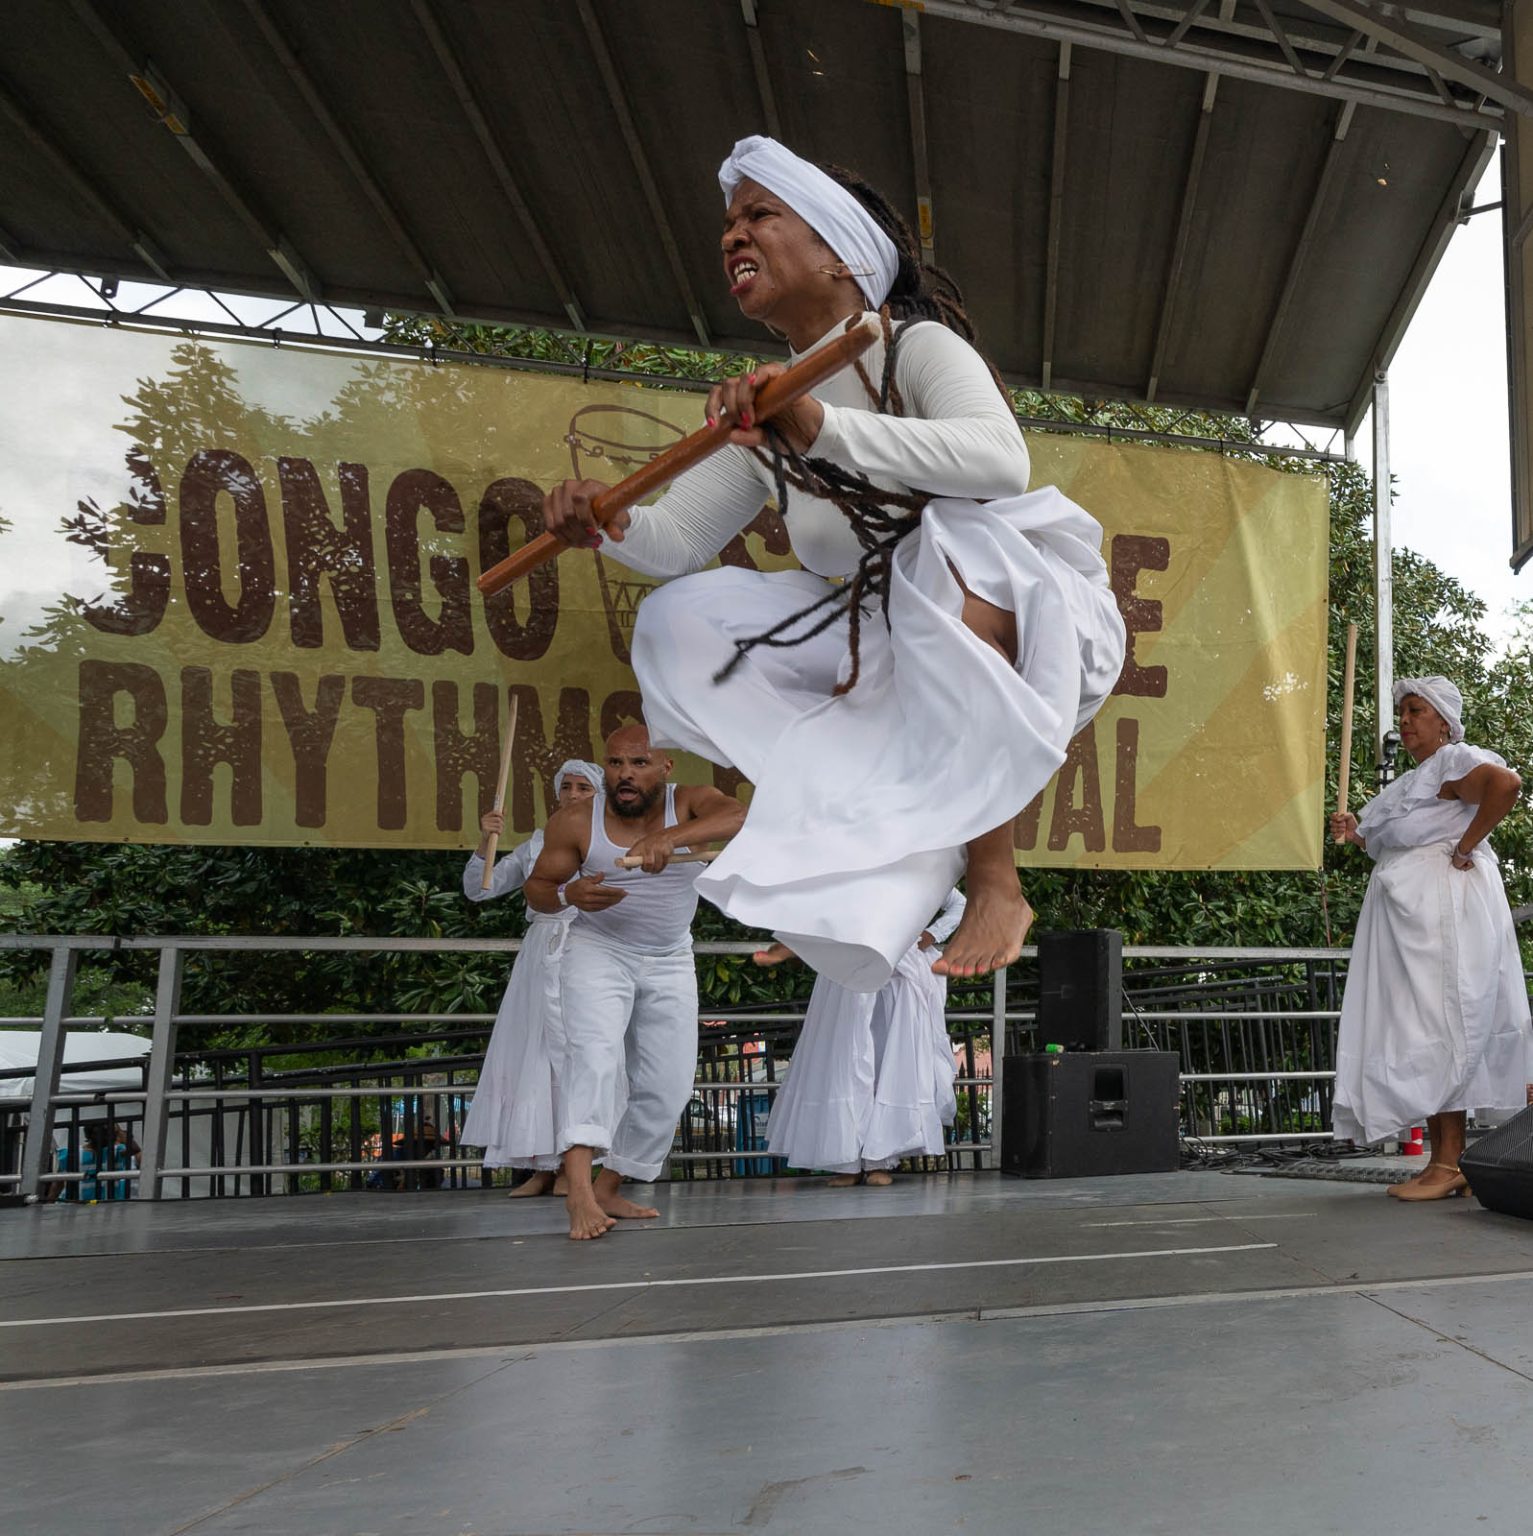 2023 Congo Square Rhythms Festival, Bombazo Dance Company, Dance, Music, New Orleans